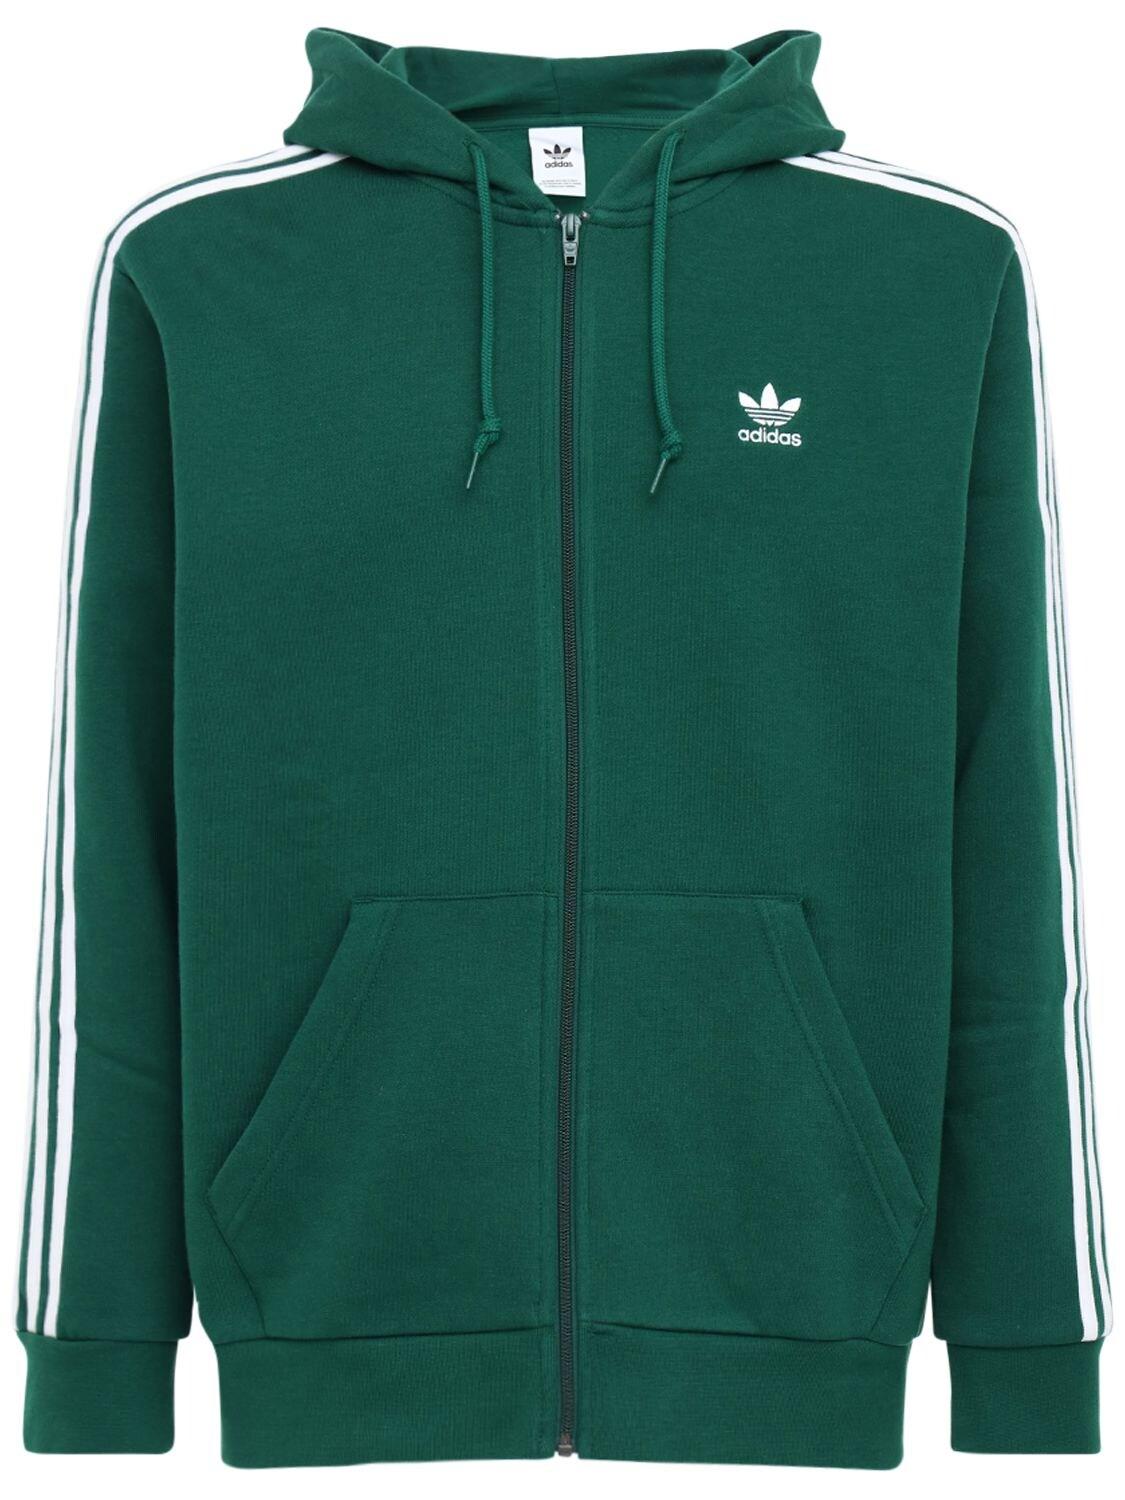 adidas Originals 3-stripes Fz Hooded Track Top in Dark Green (Green) for  Men - Lyst